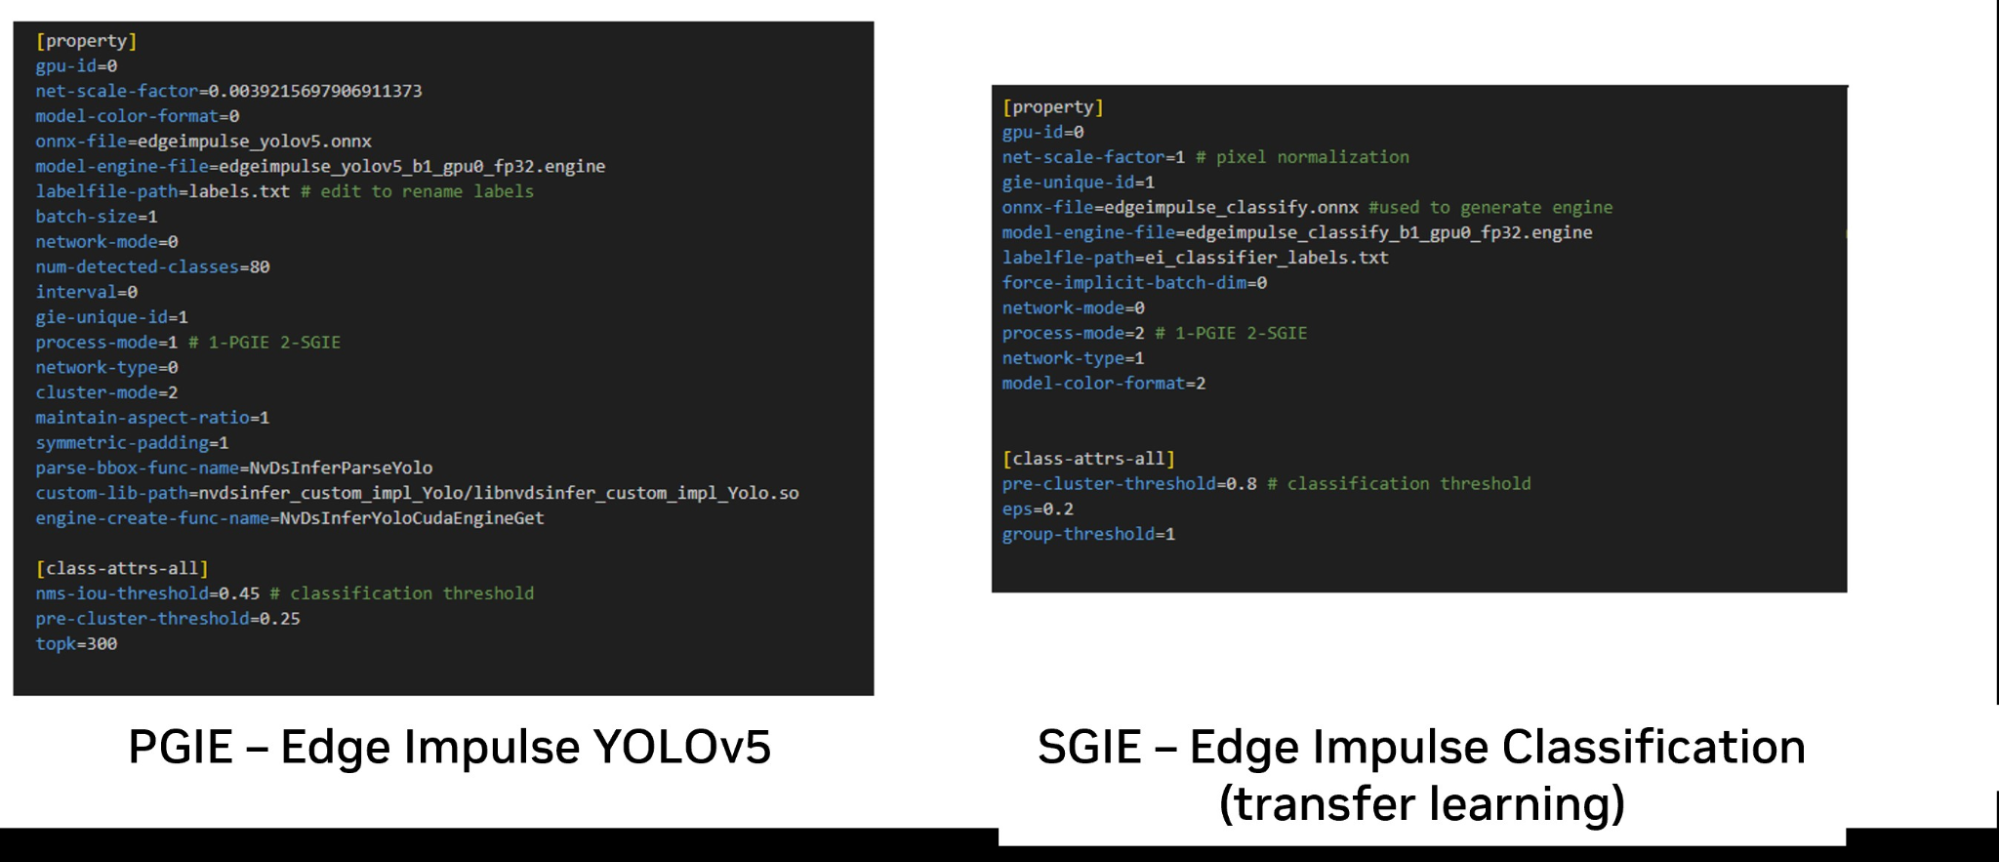 Screenshot of Gst-nvinfer configuration parameter for Edge Impulse.
